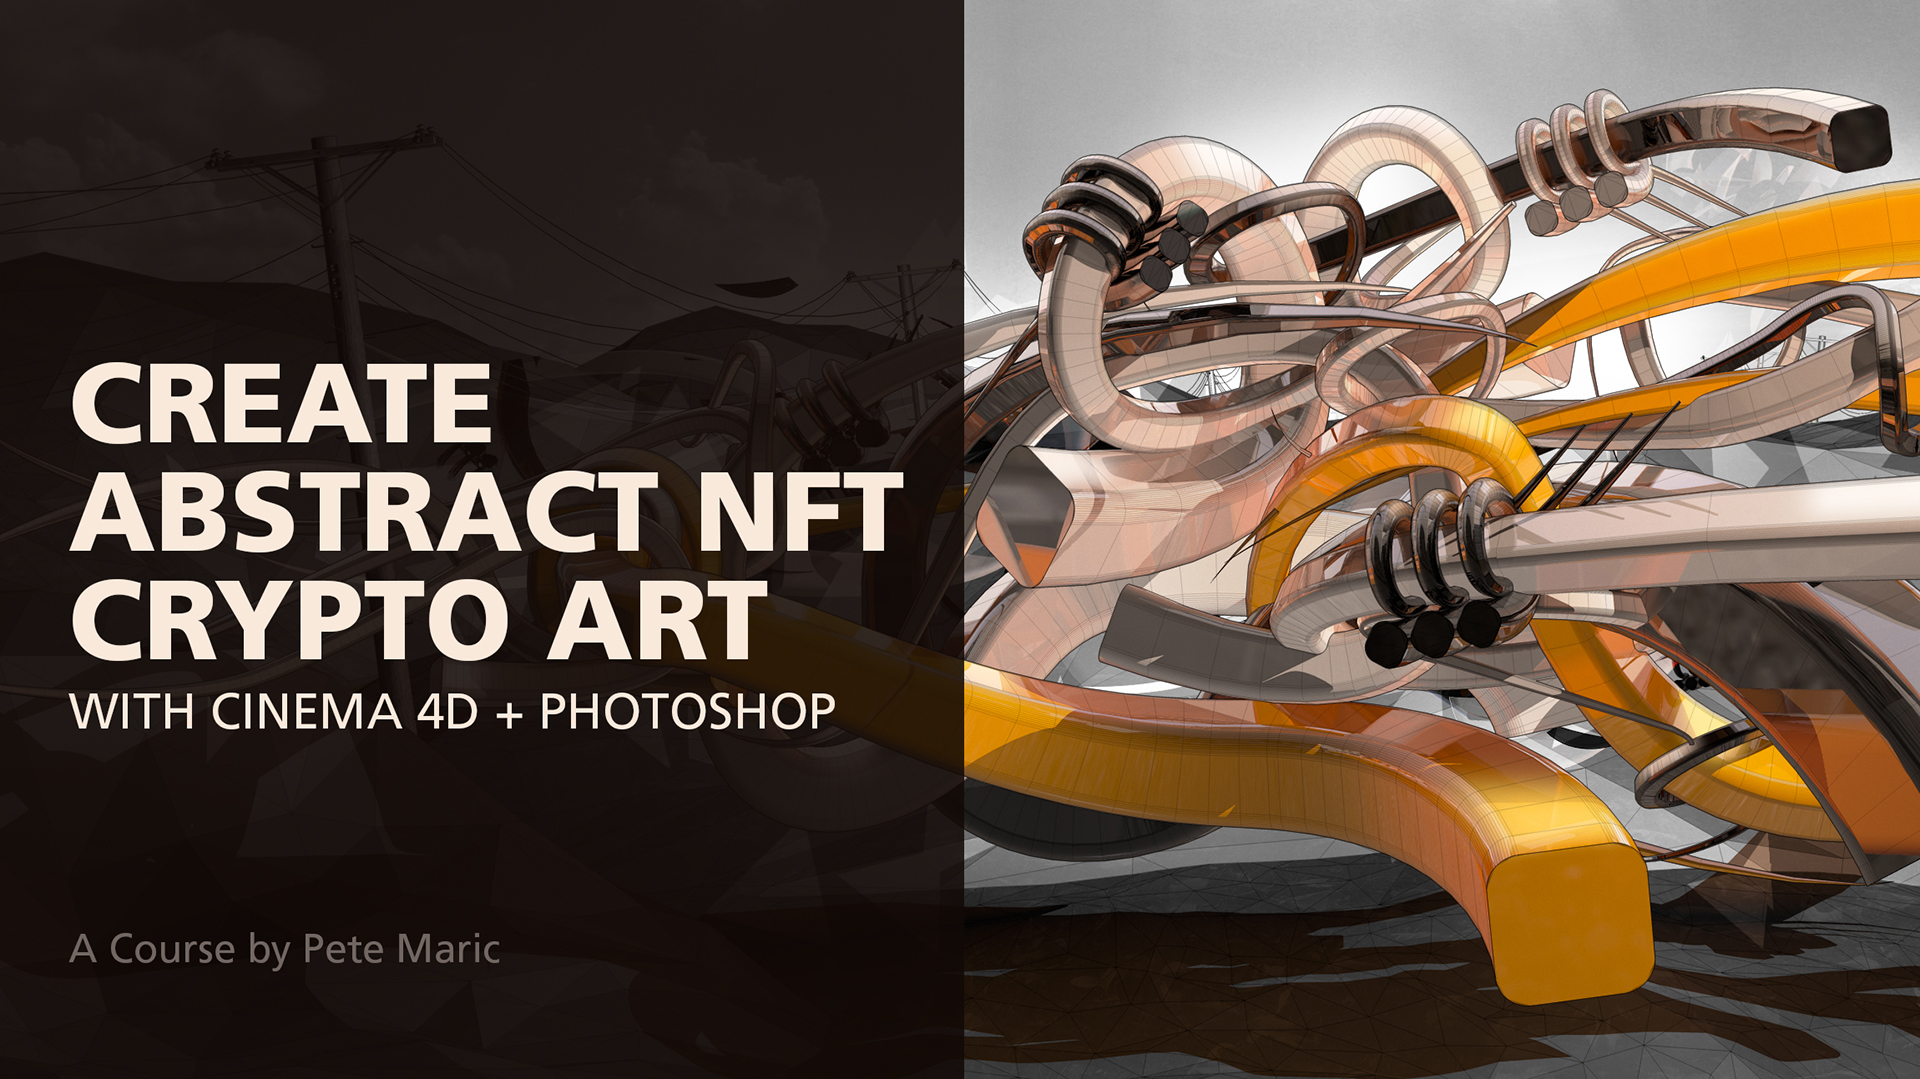 Create Abstract NFT Crypto Art with Cinema 4D + Photoshop